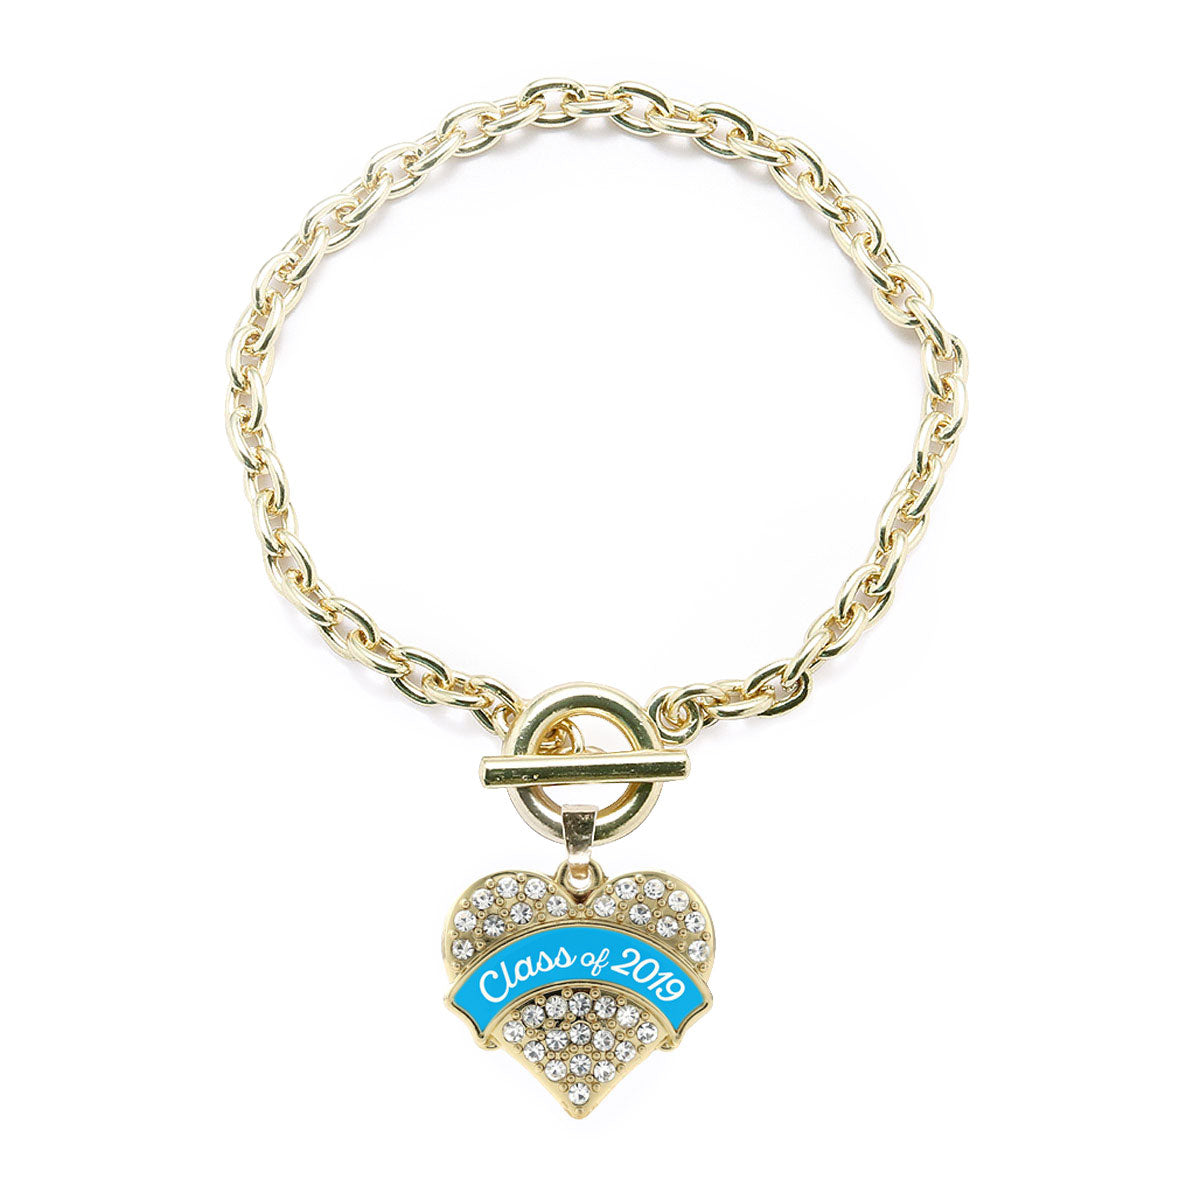 Gold Class of 2019 - Blue Pave Heart Charm Toggle Bracelet